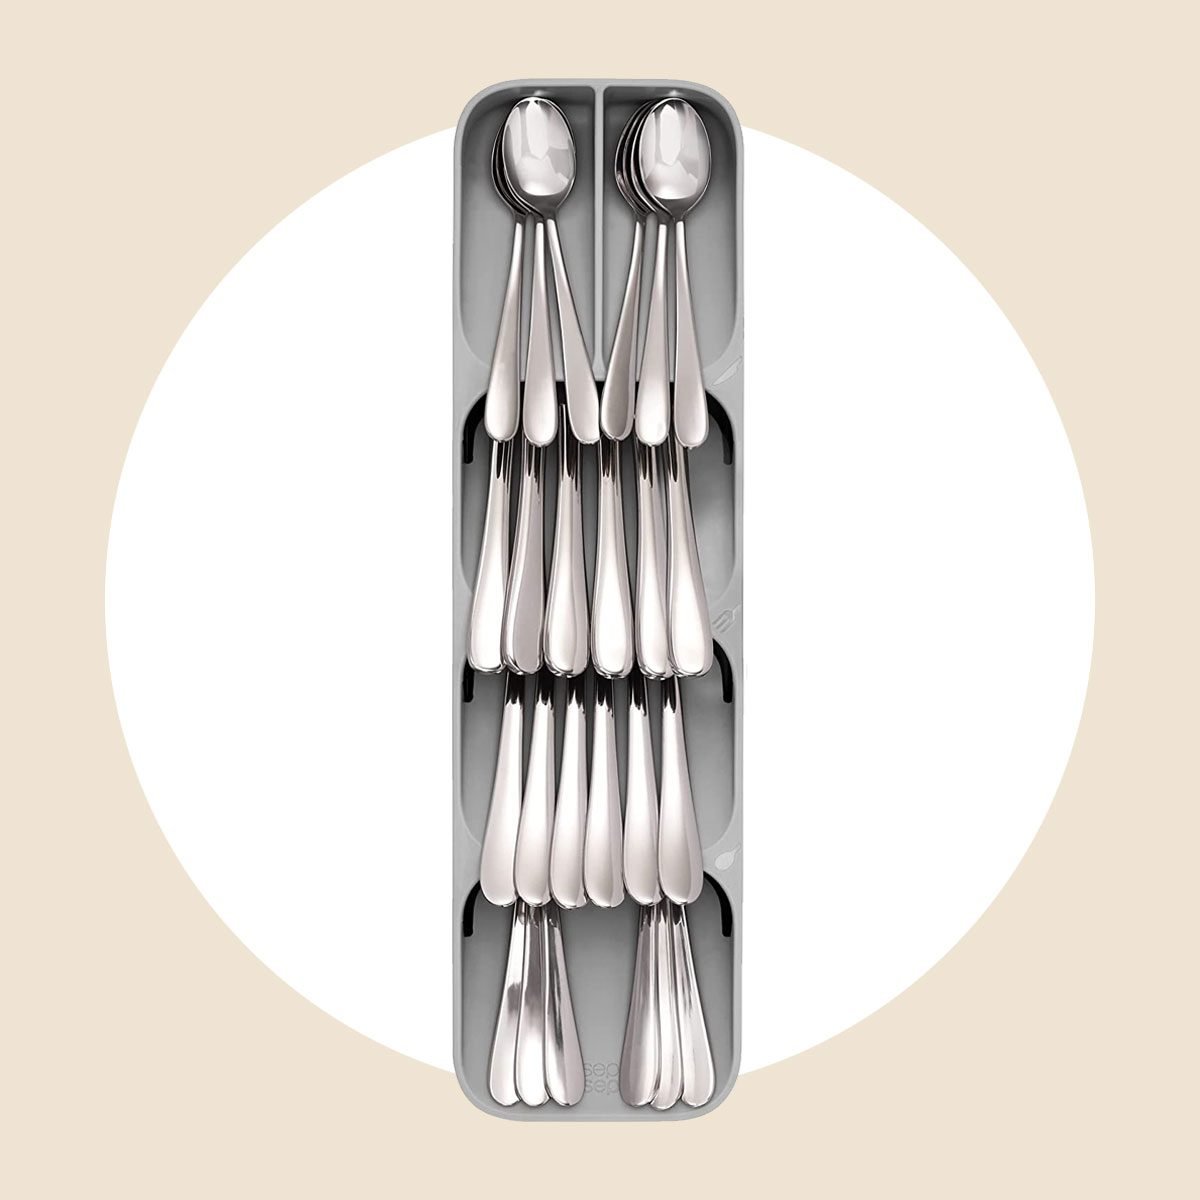 Joseph Joseph Drawerstore Compact Cutlery Organizer Kitchen Drawer Tray Ecomm Via Amazon